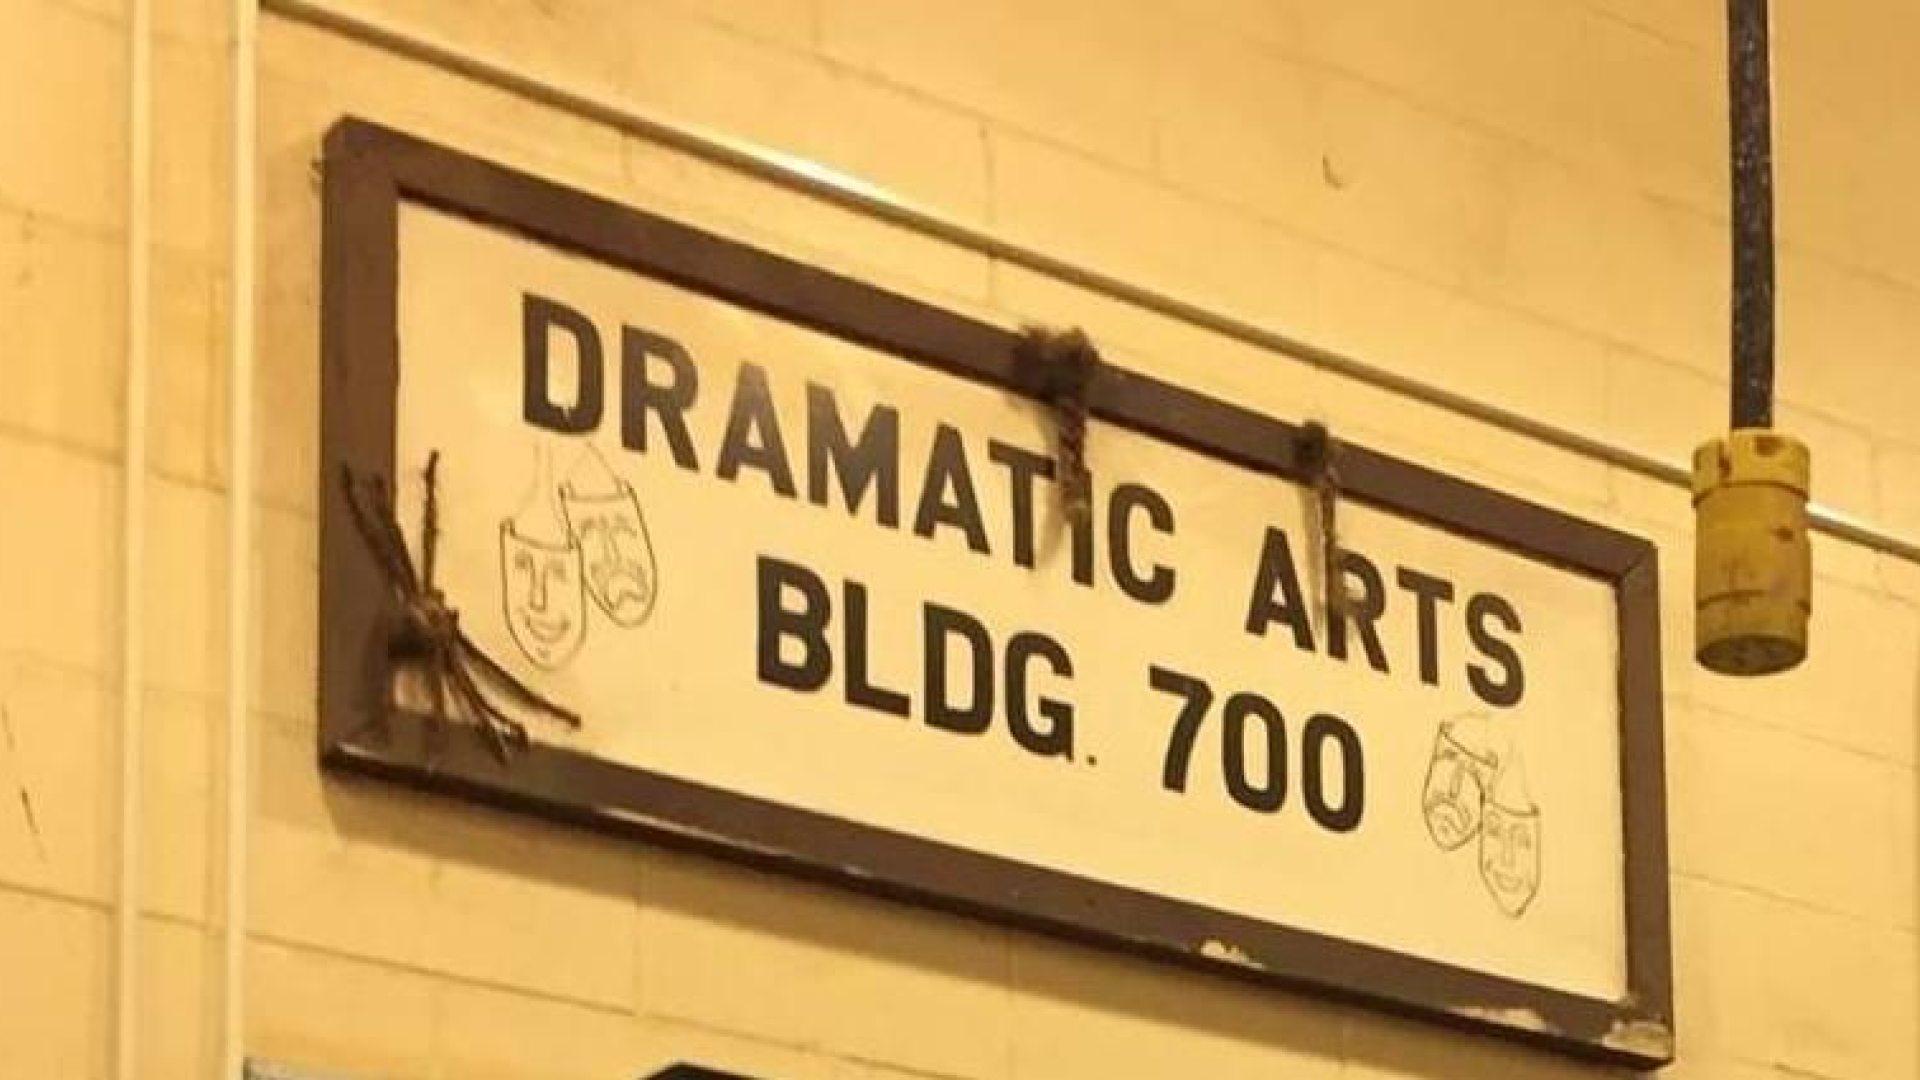 Dramatic arts building 700